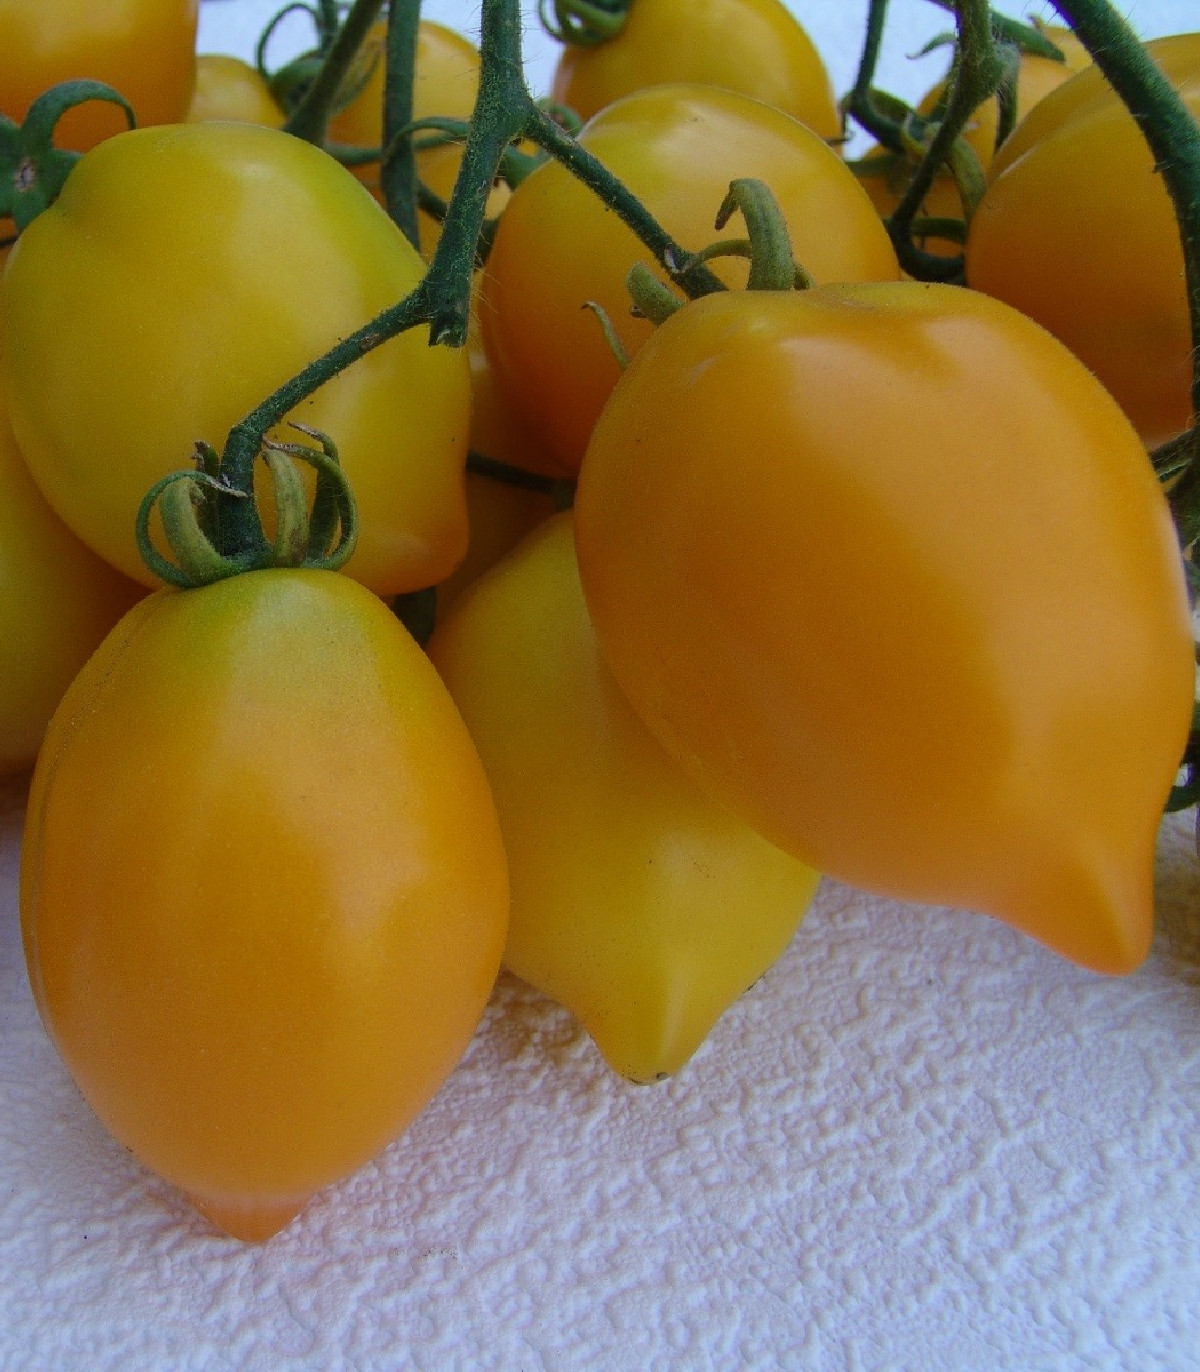 Rajče Citrina - Solanum lycopersicum - osivo rajčat - 10 ks